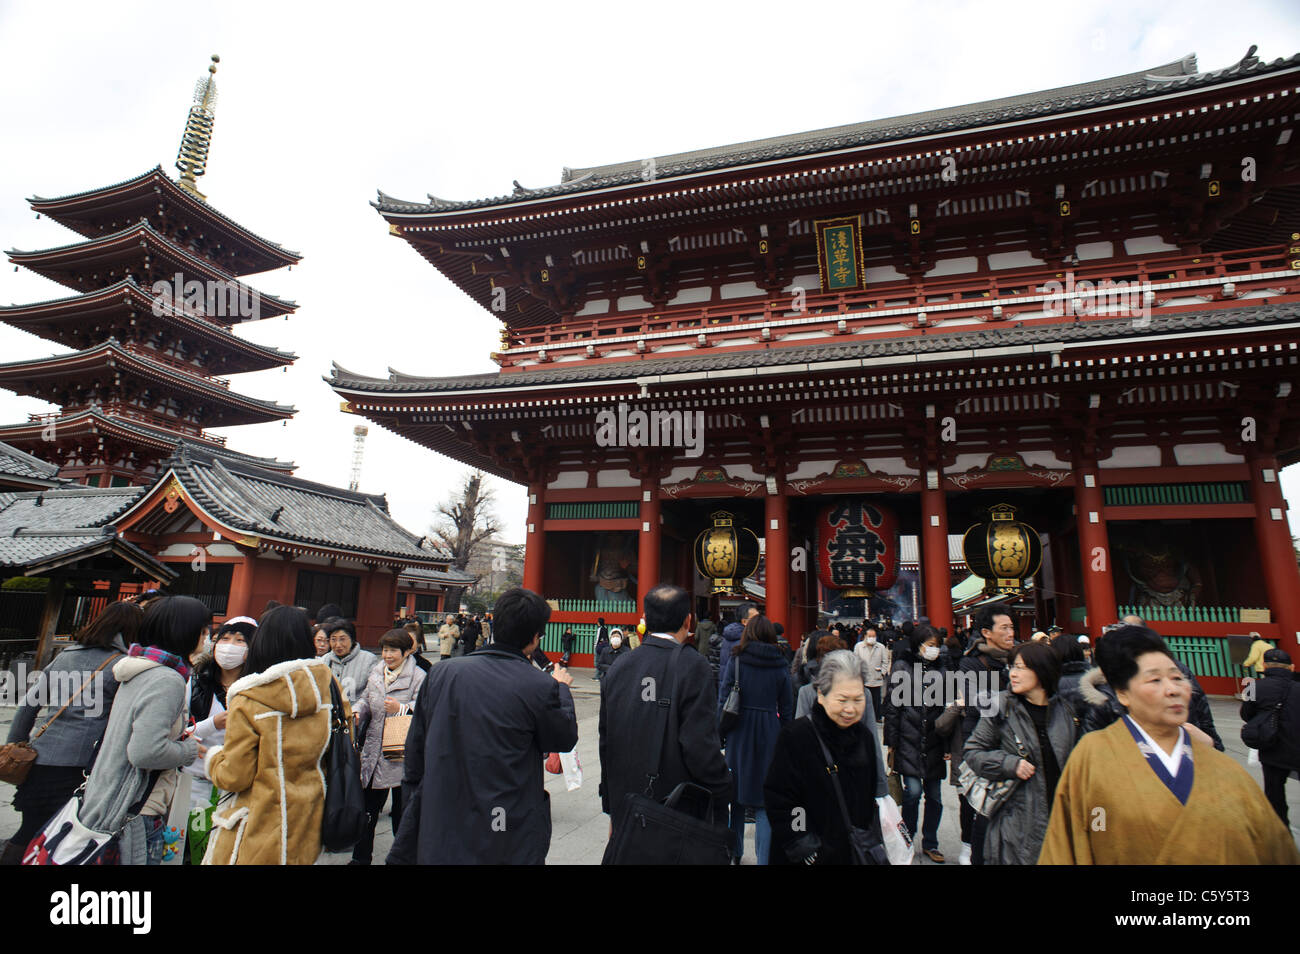 Crowd of people at Sensoji temple, Asakusa, Tokyo, Japan Stock Photo